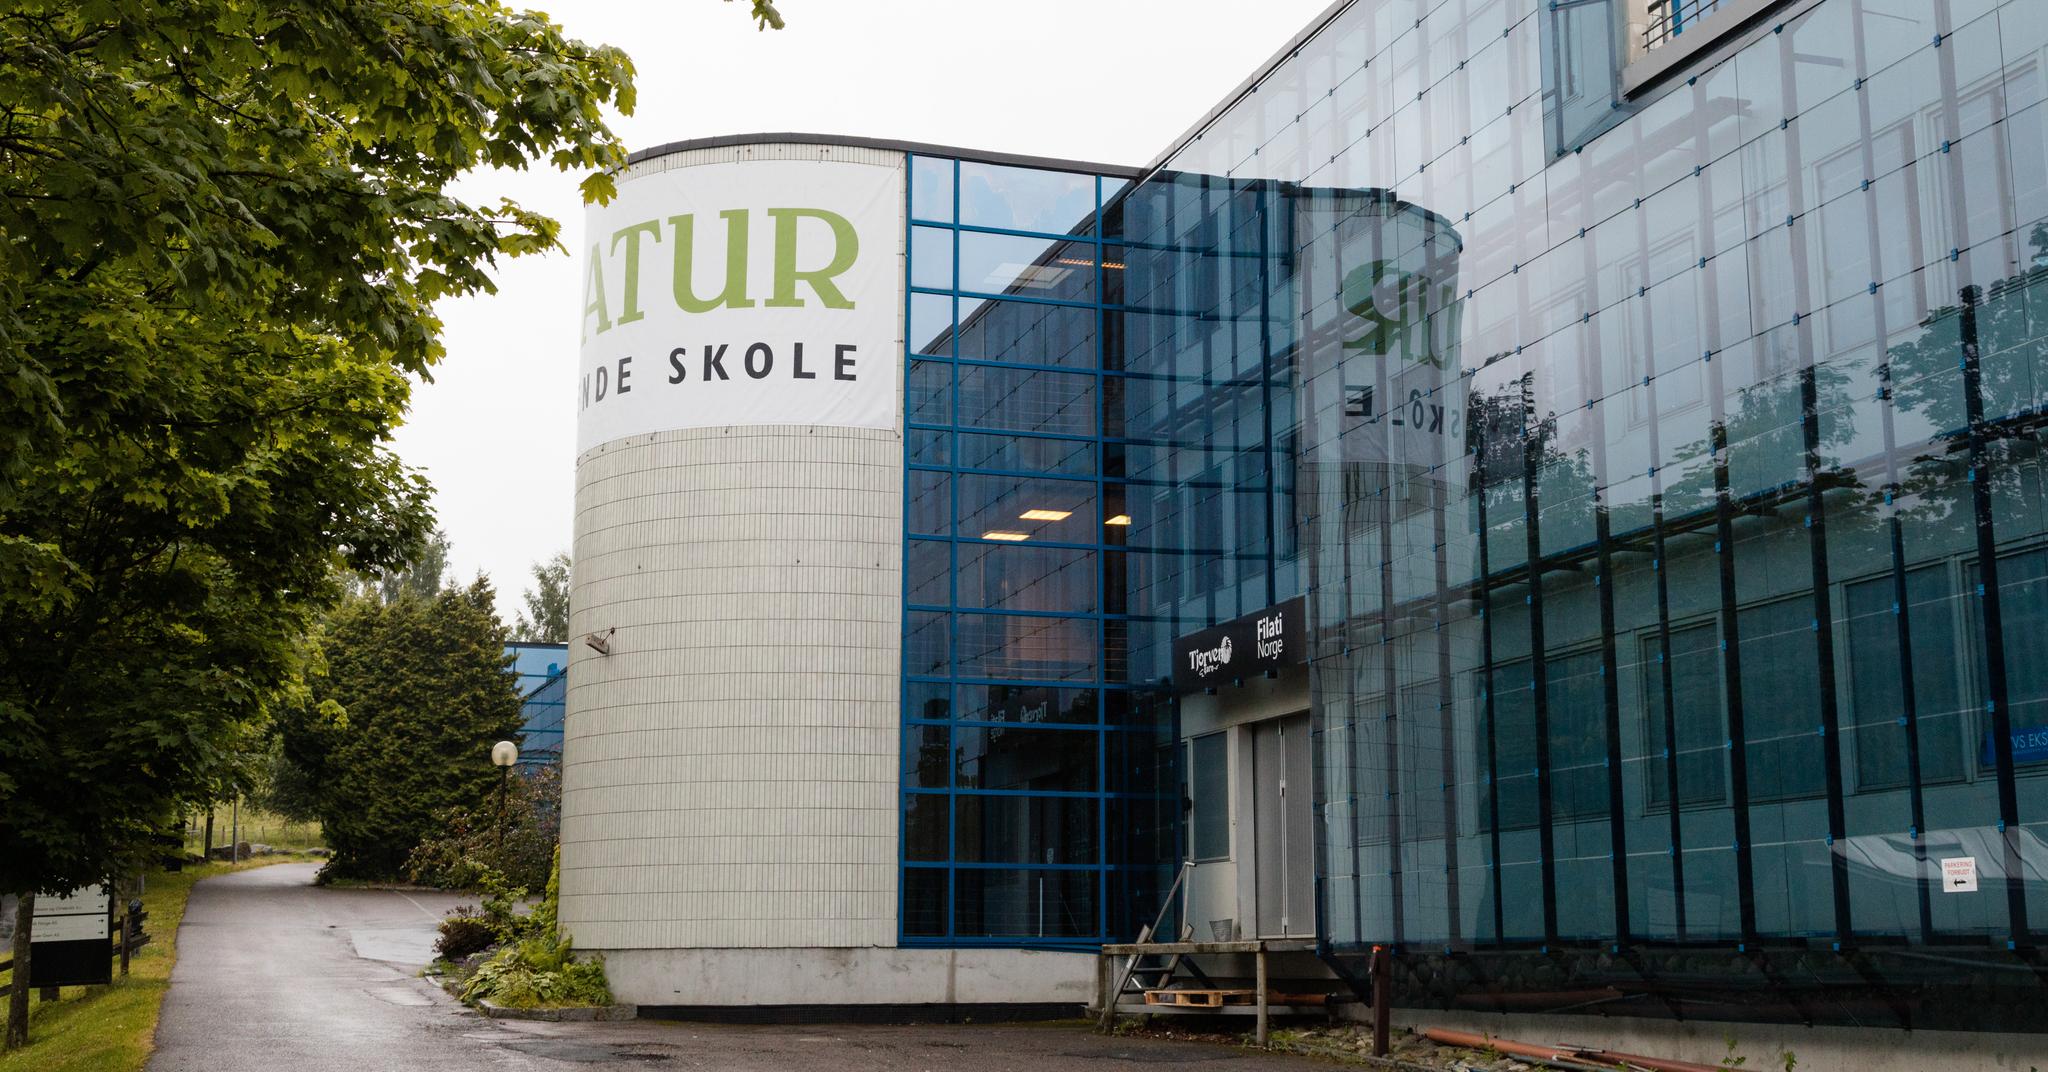 Det trengs ikke færre, men flere grønne skoler i hovedstaden, skriver Rune Slagstad. Her er Natur videregående skole på Furuset.